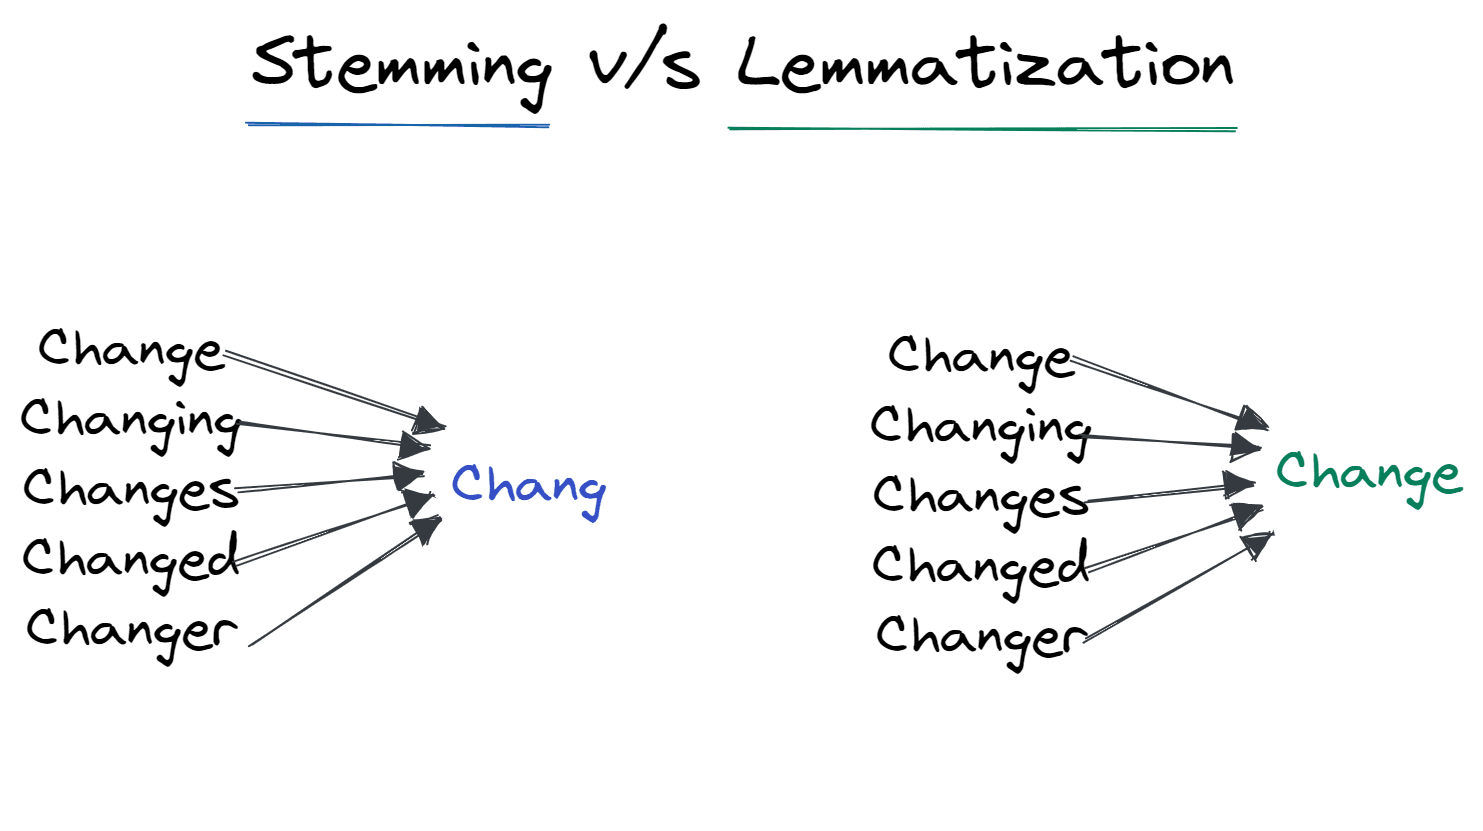 Stemming vs. Lemmatization